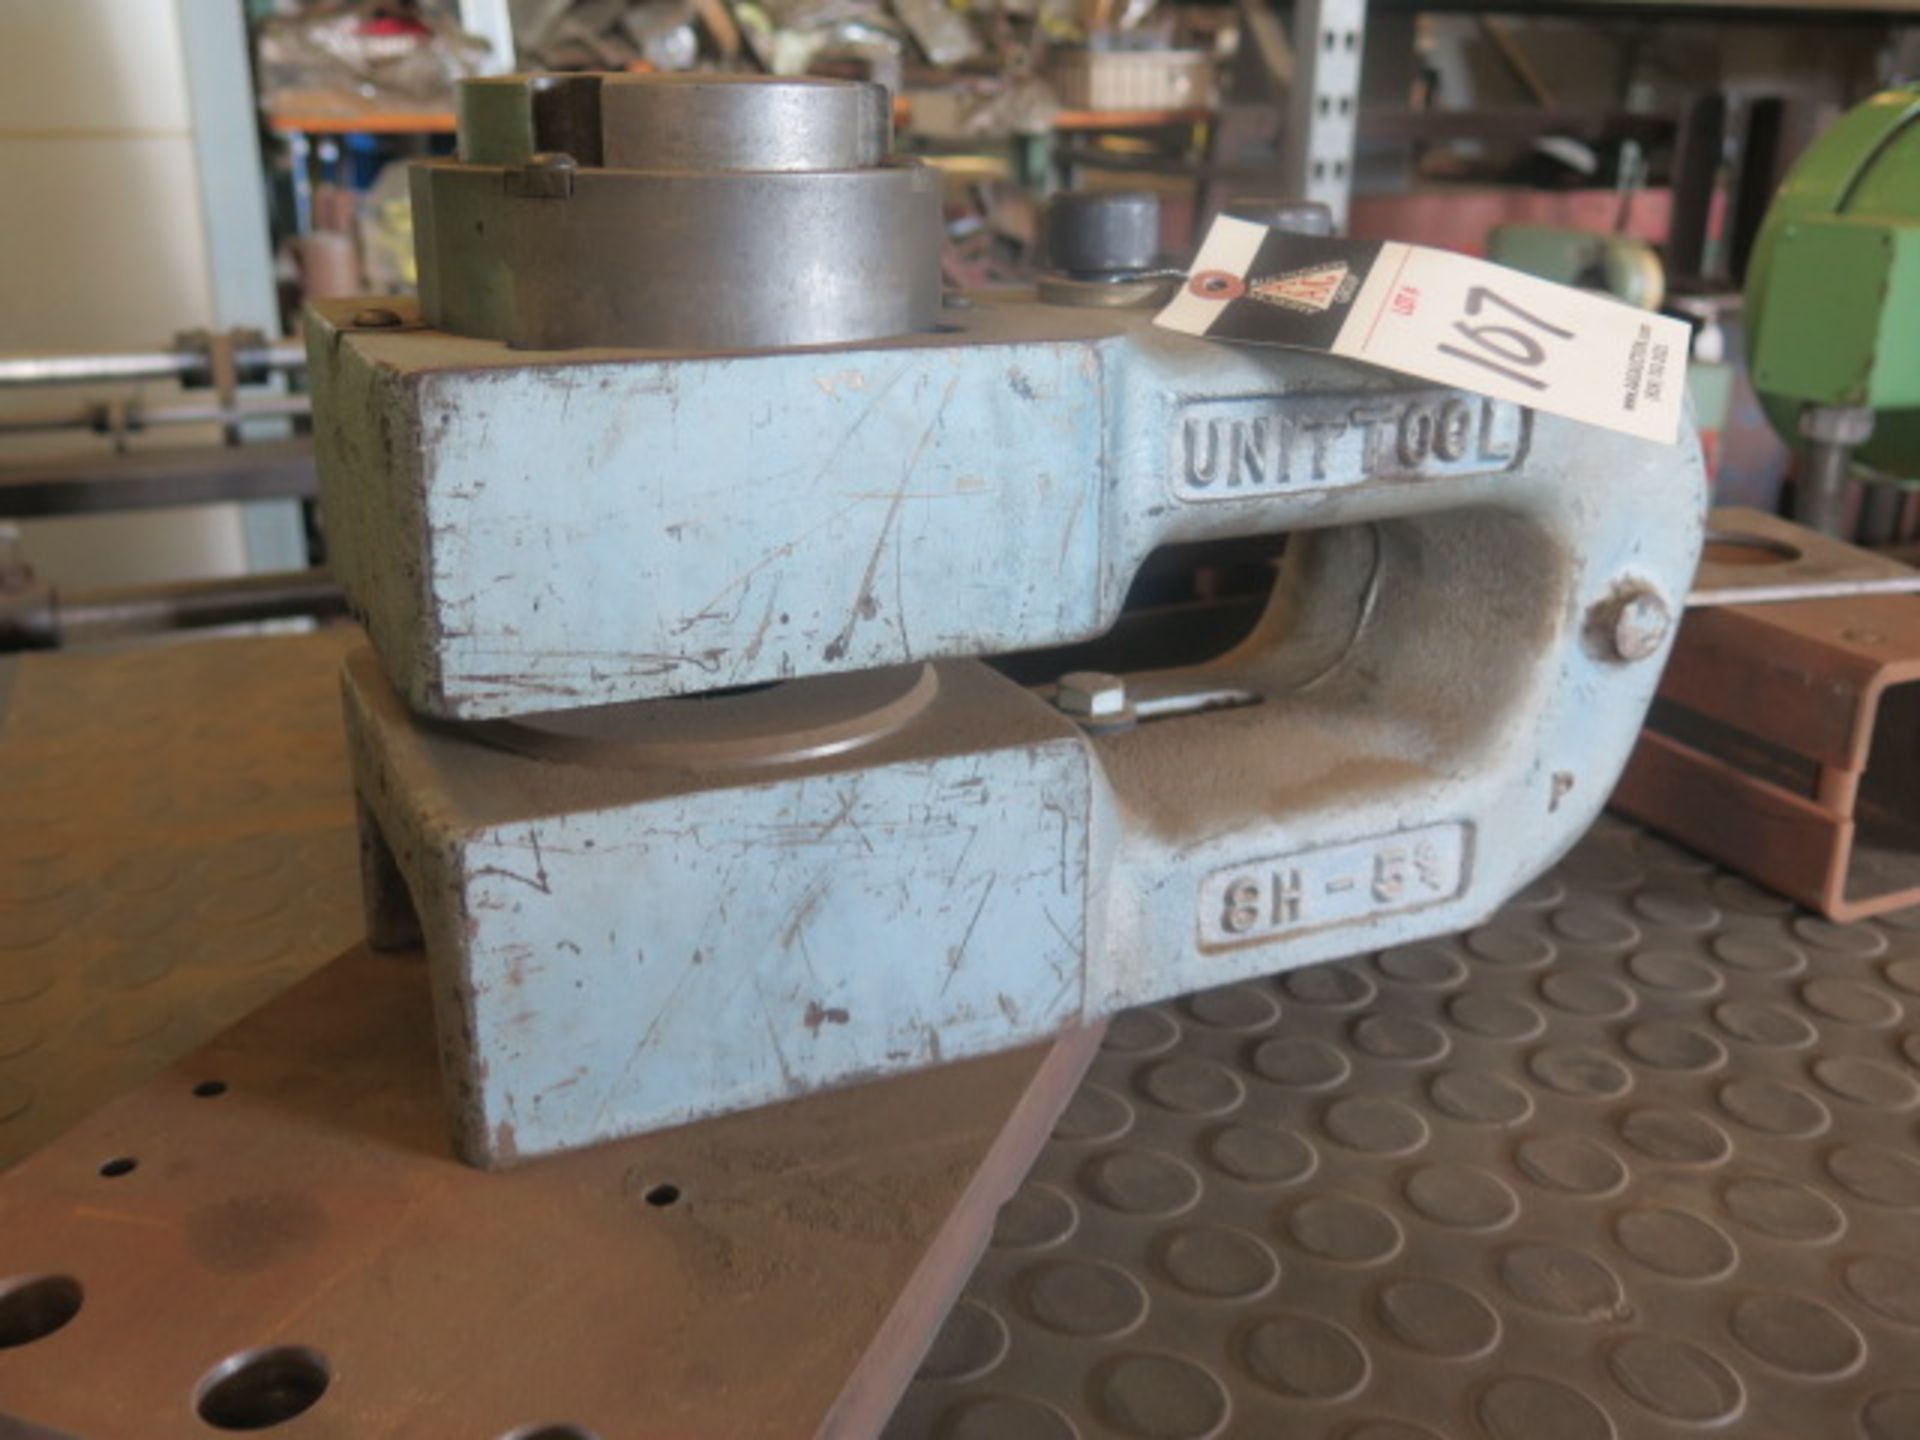 Unipunch 5 3/4" Die Base w/ Custom Adaptor Plate for Ironwroker - Image 2 of 4